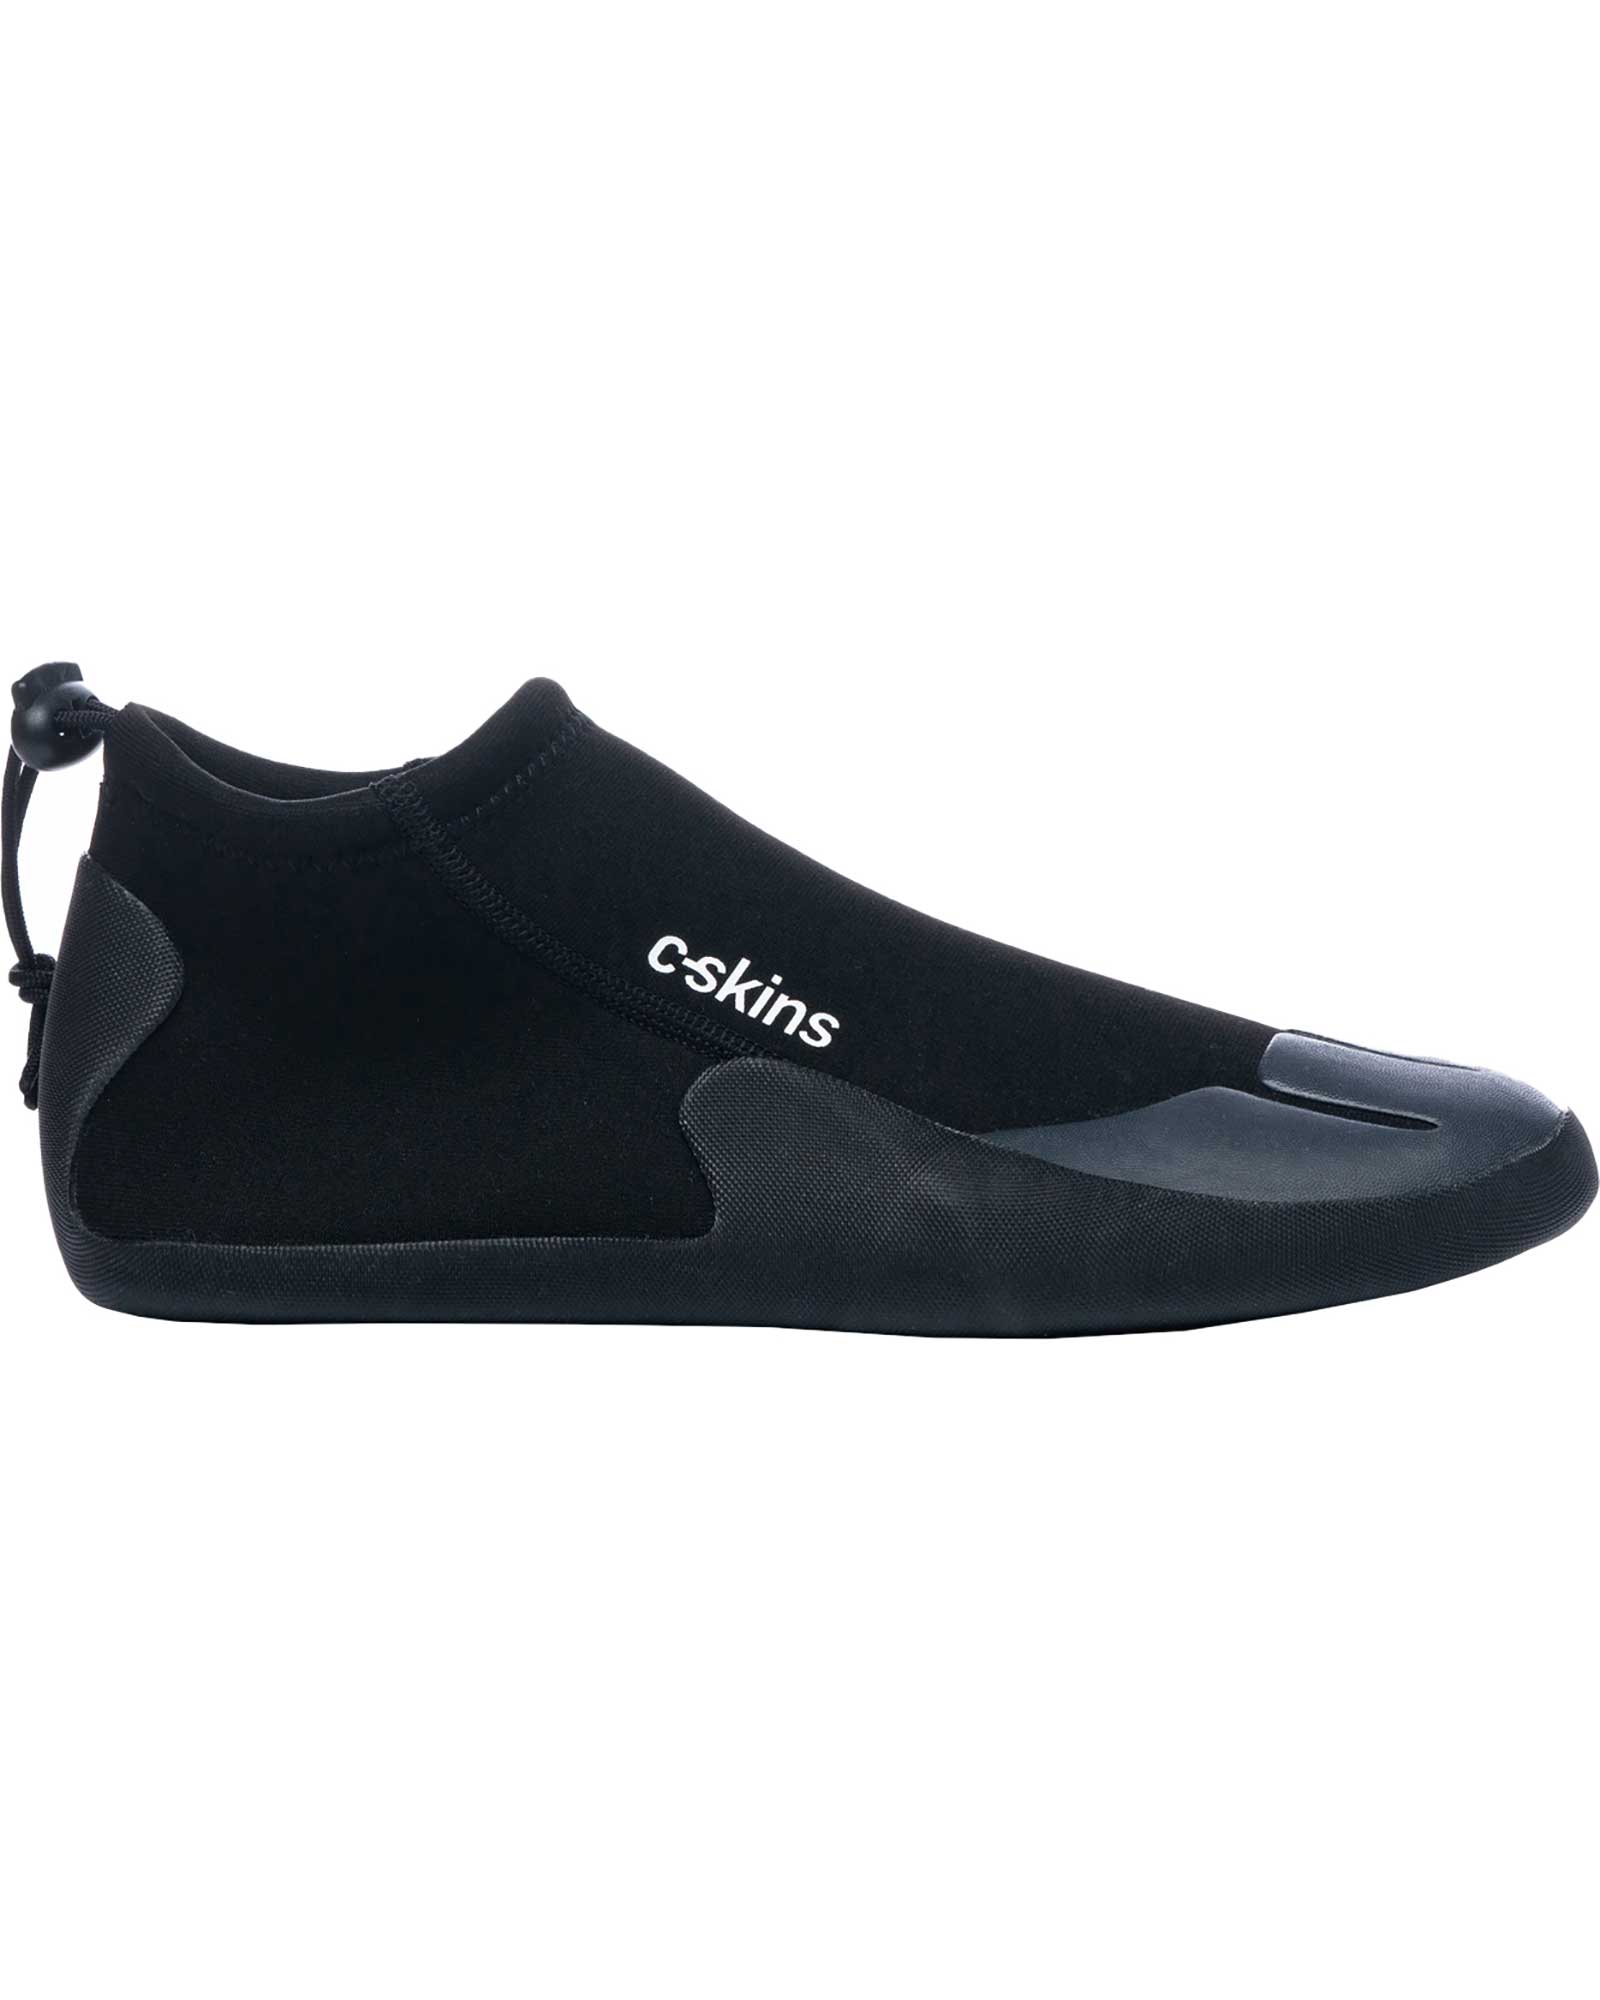 C Skins Legend 3mm Reef Boots - Black/Charcoal UK 11